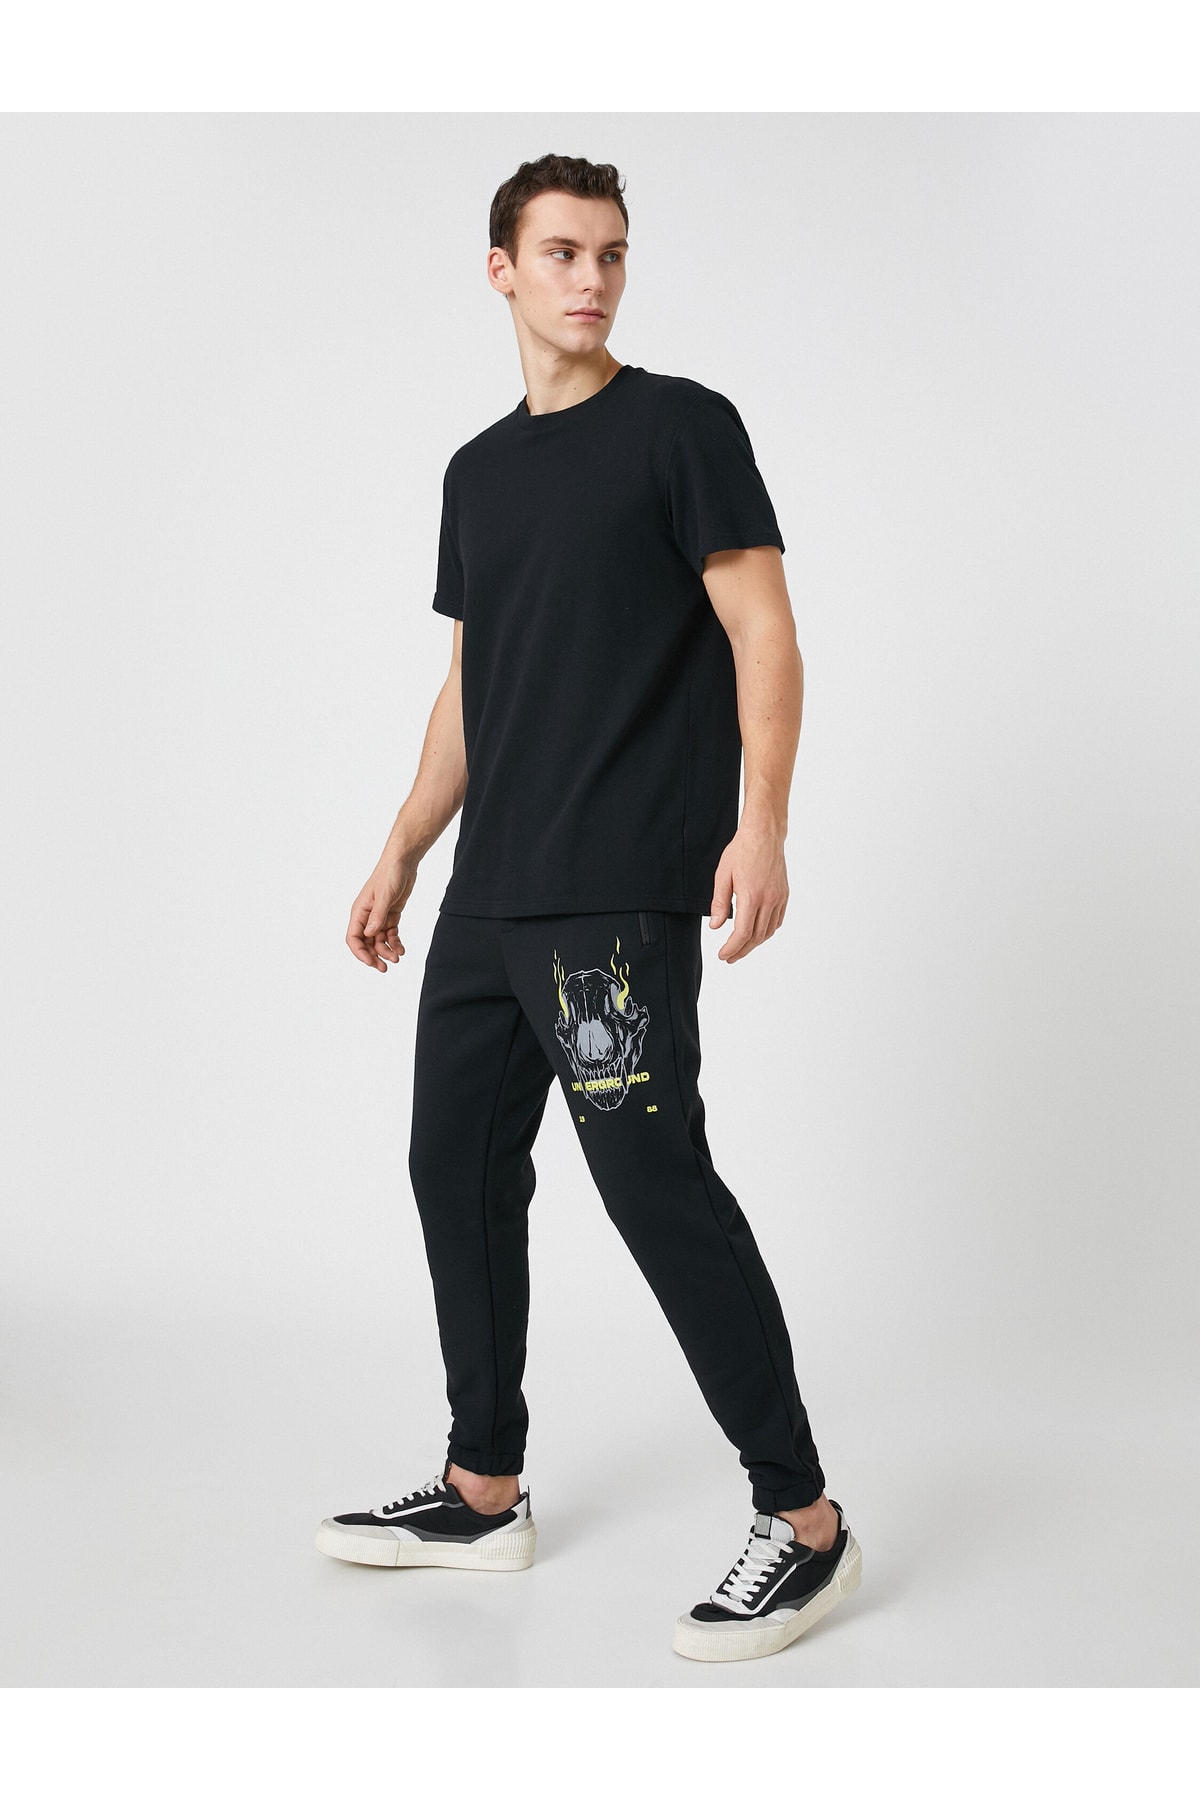 Koton Jogger Sweatpants with a skull print, zippered pockets, Lace-Up Waist.